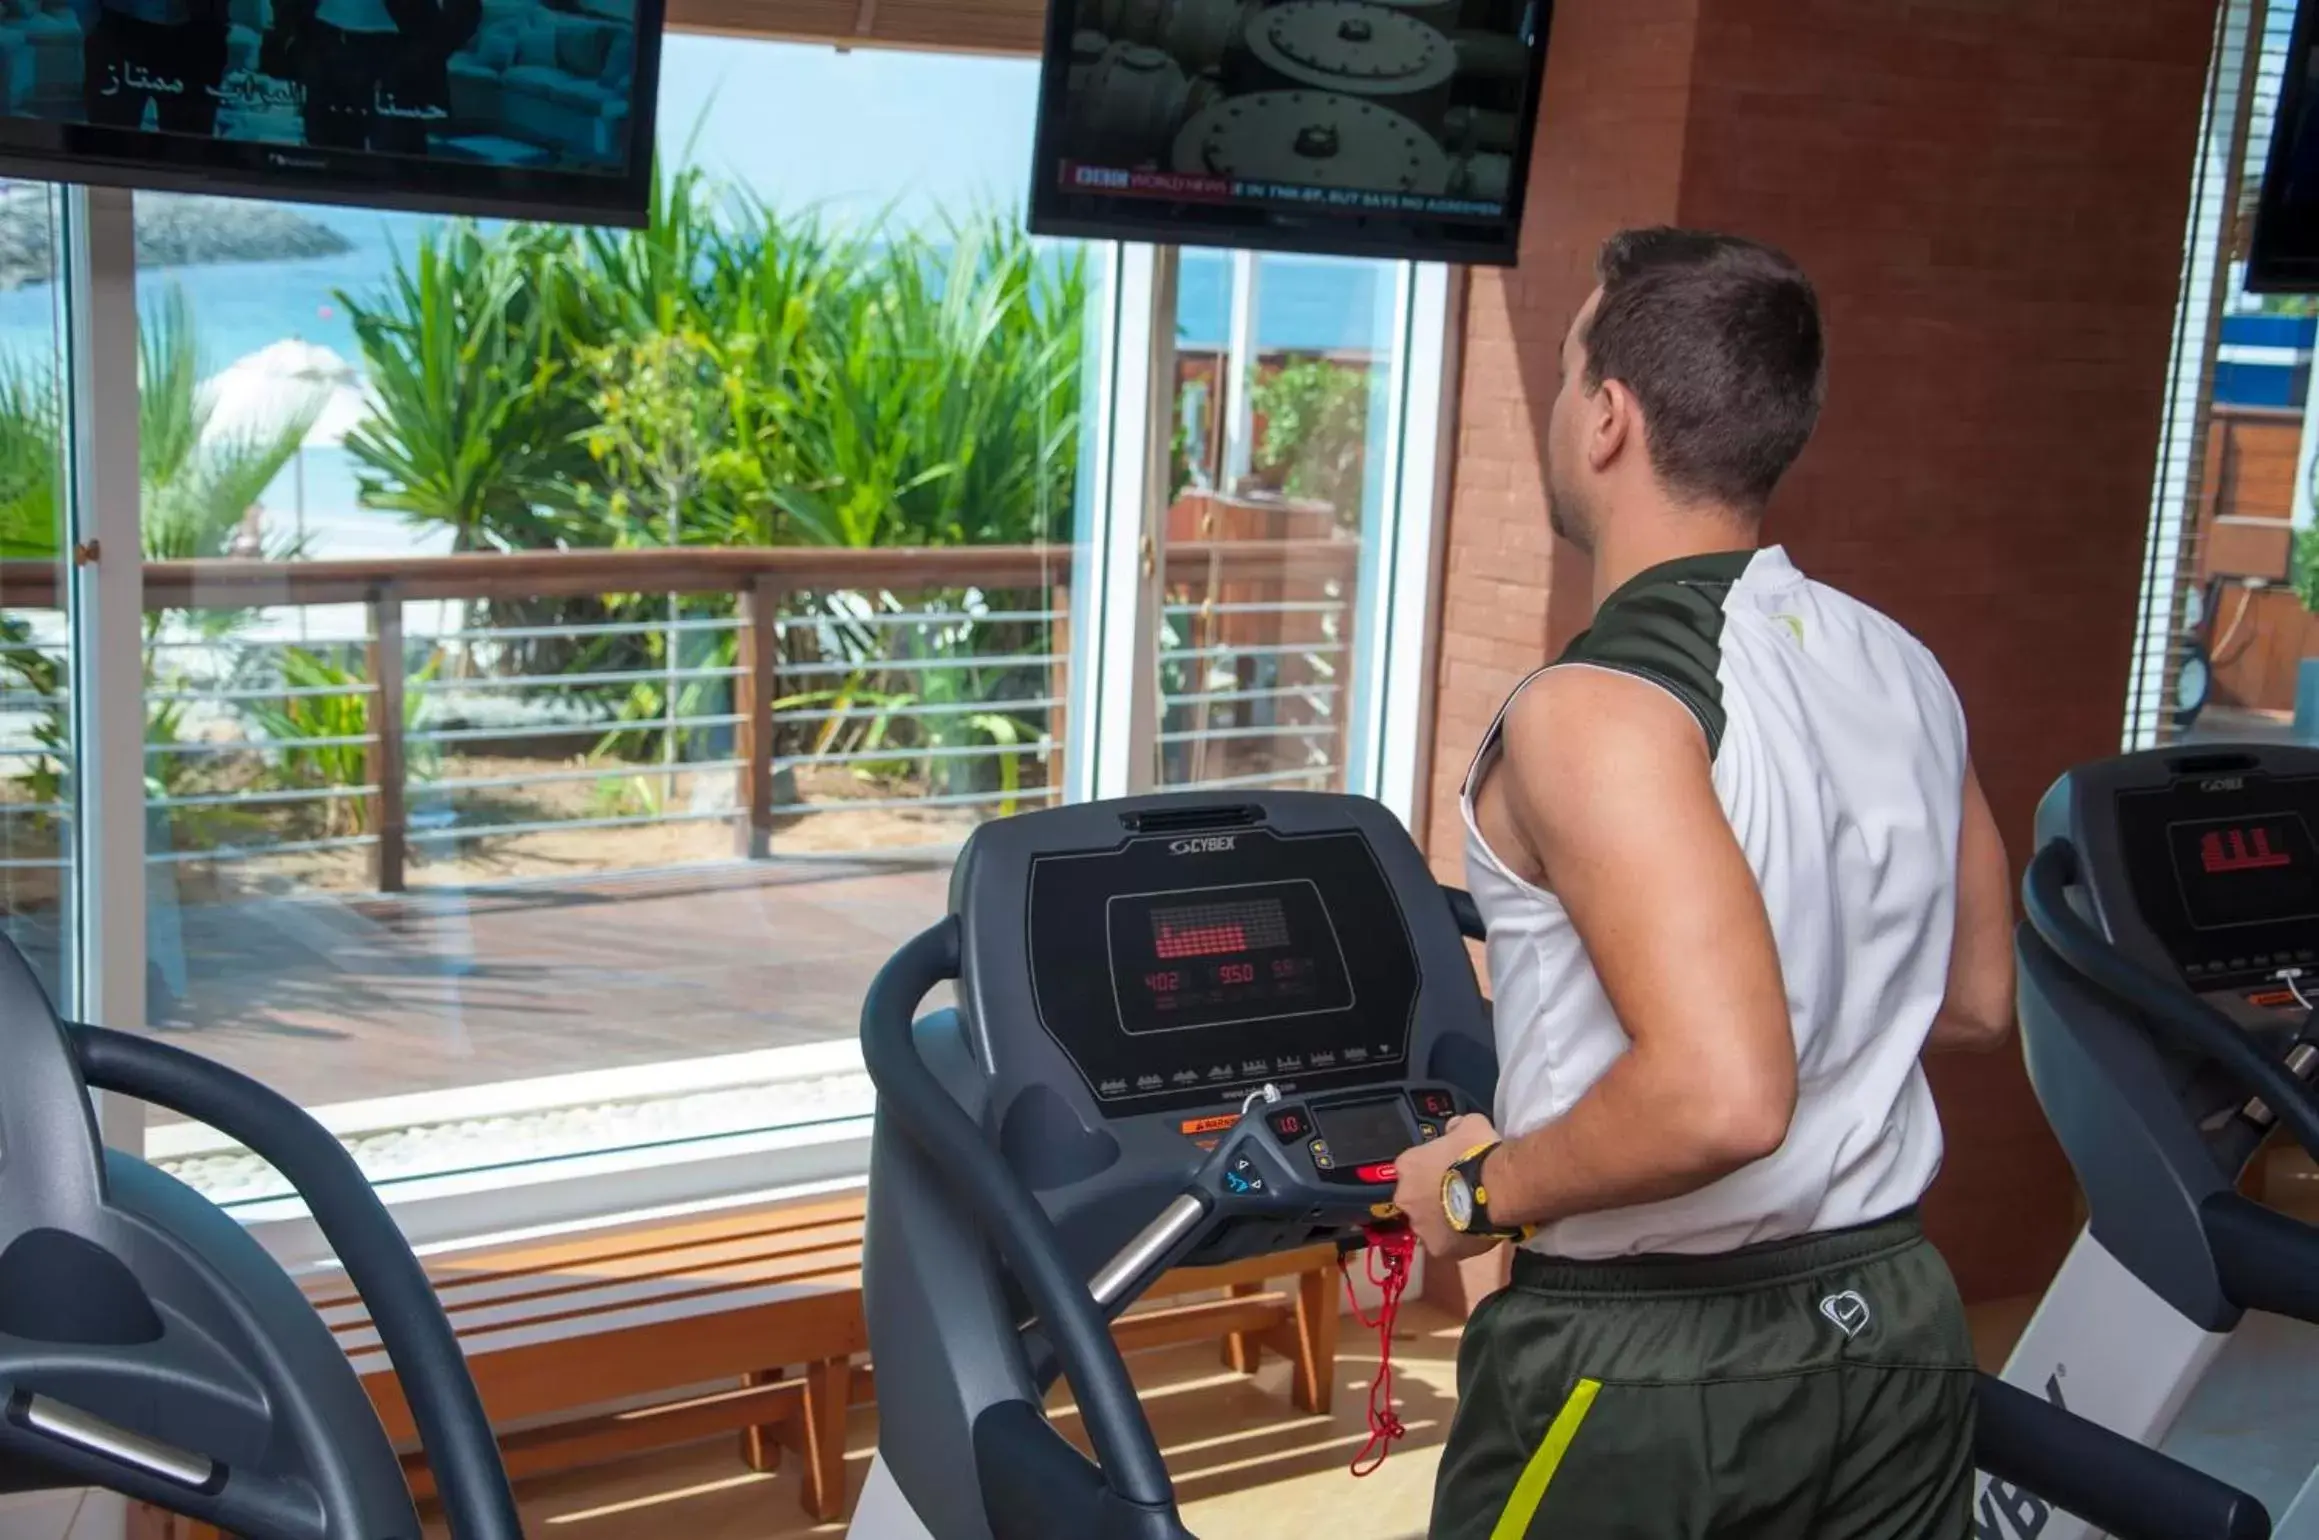 Fitness centre/facilities in Dubai Marine Beach Resort & Spa